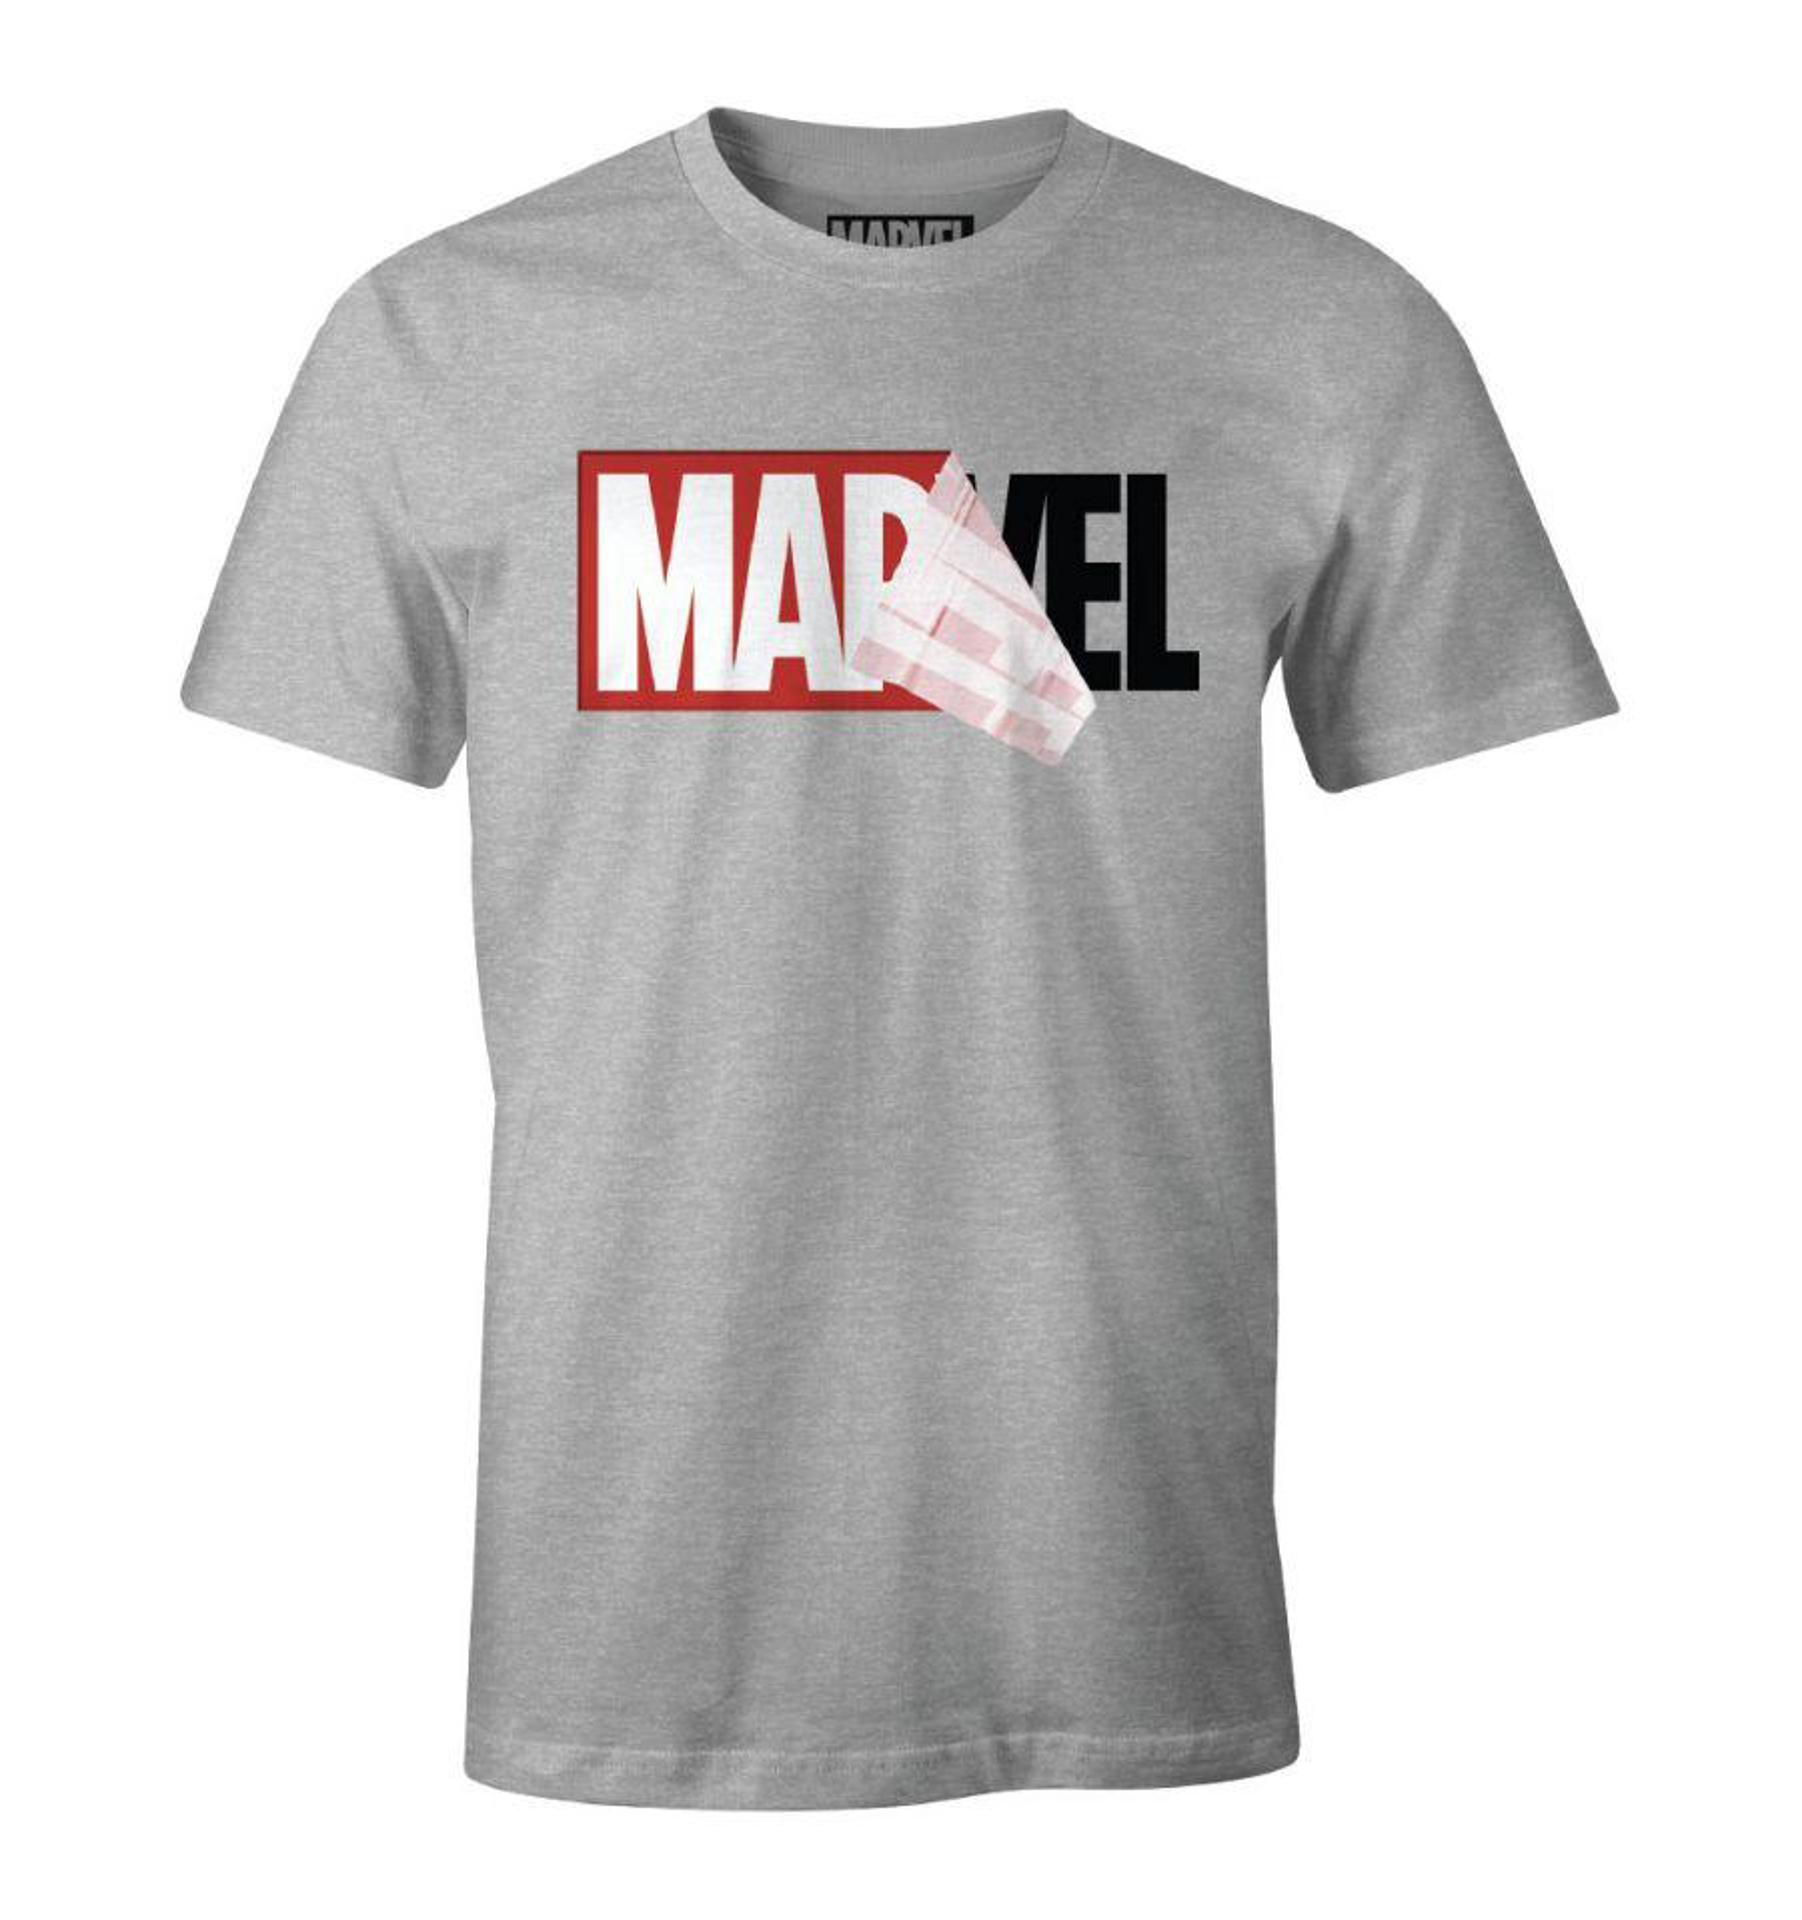 Marvel - Logo Mania Grey T-Shirt S